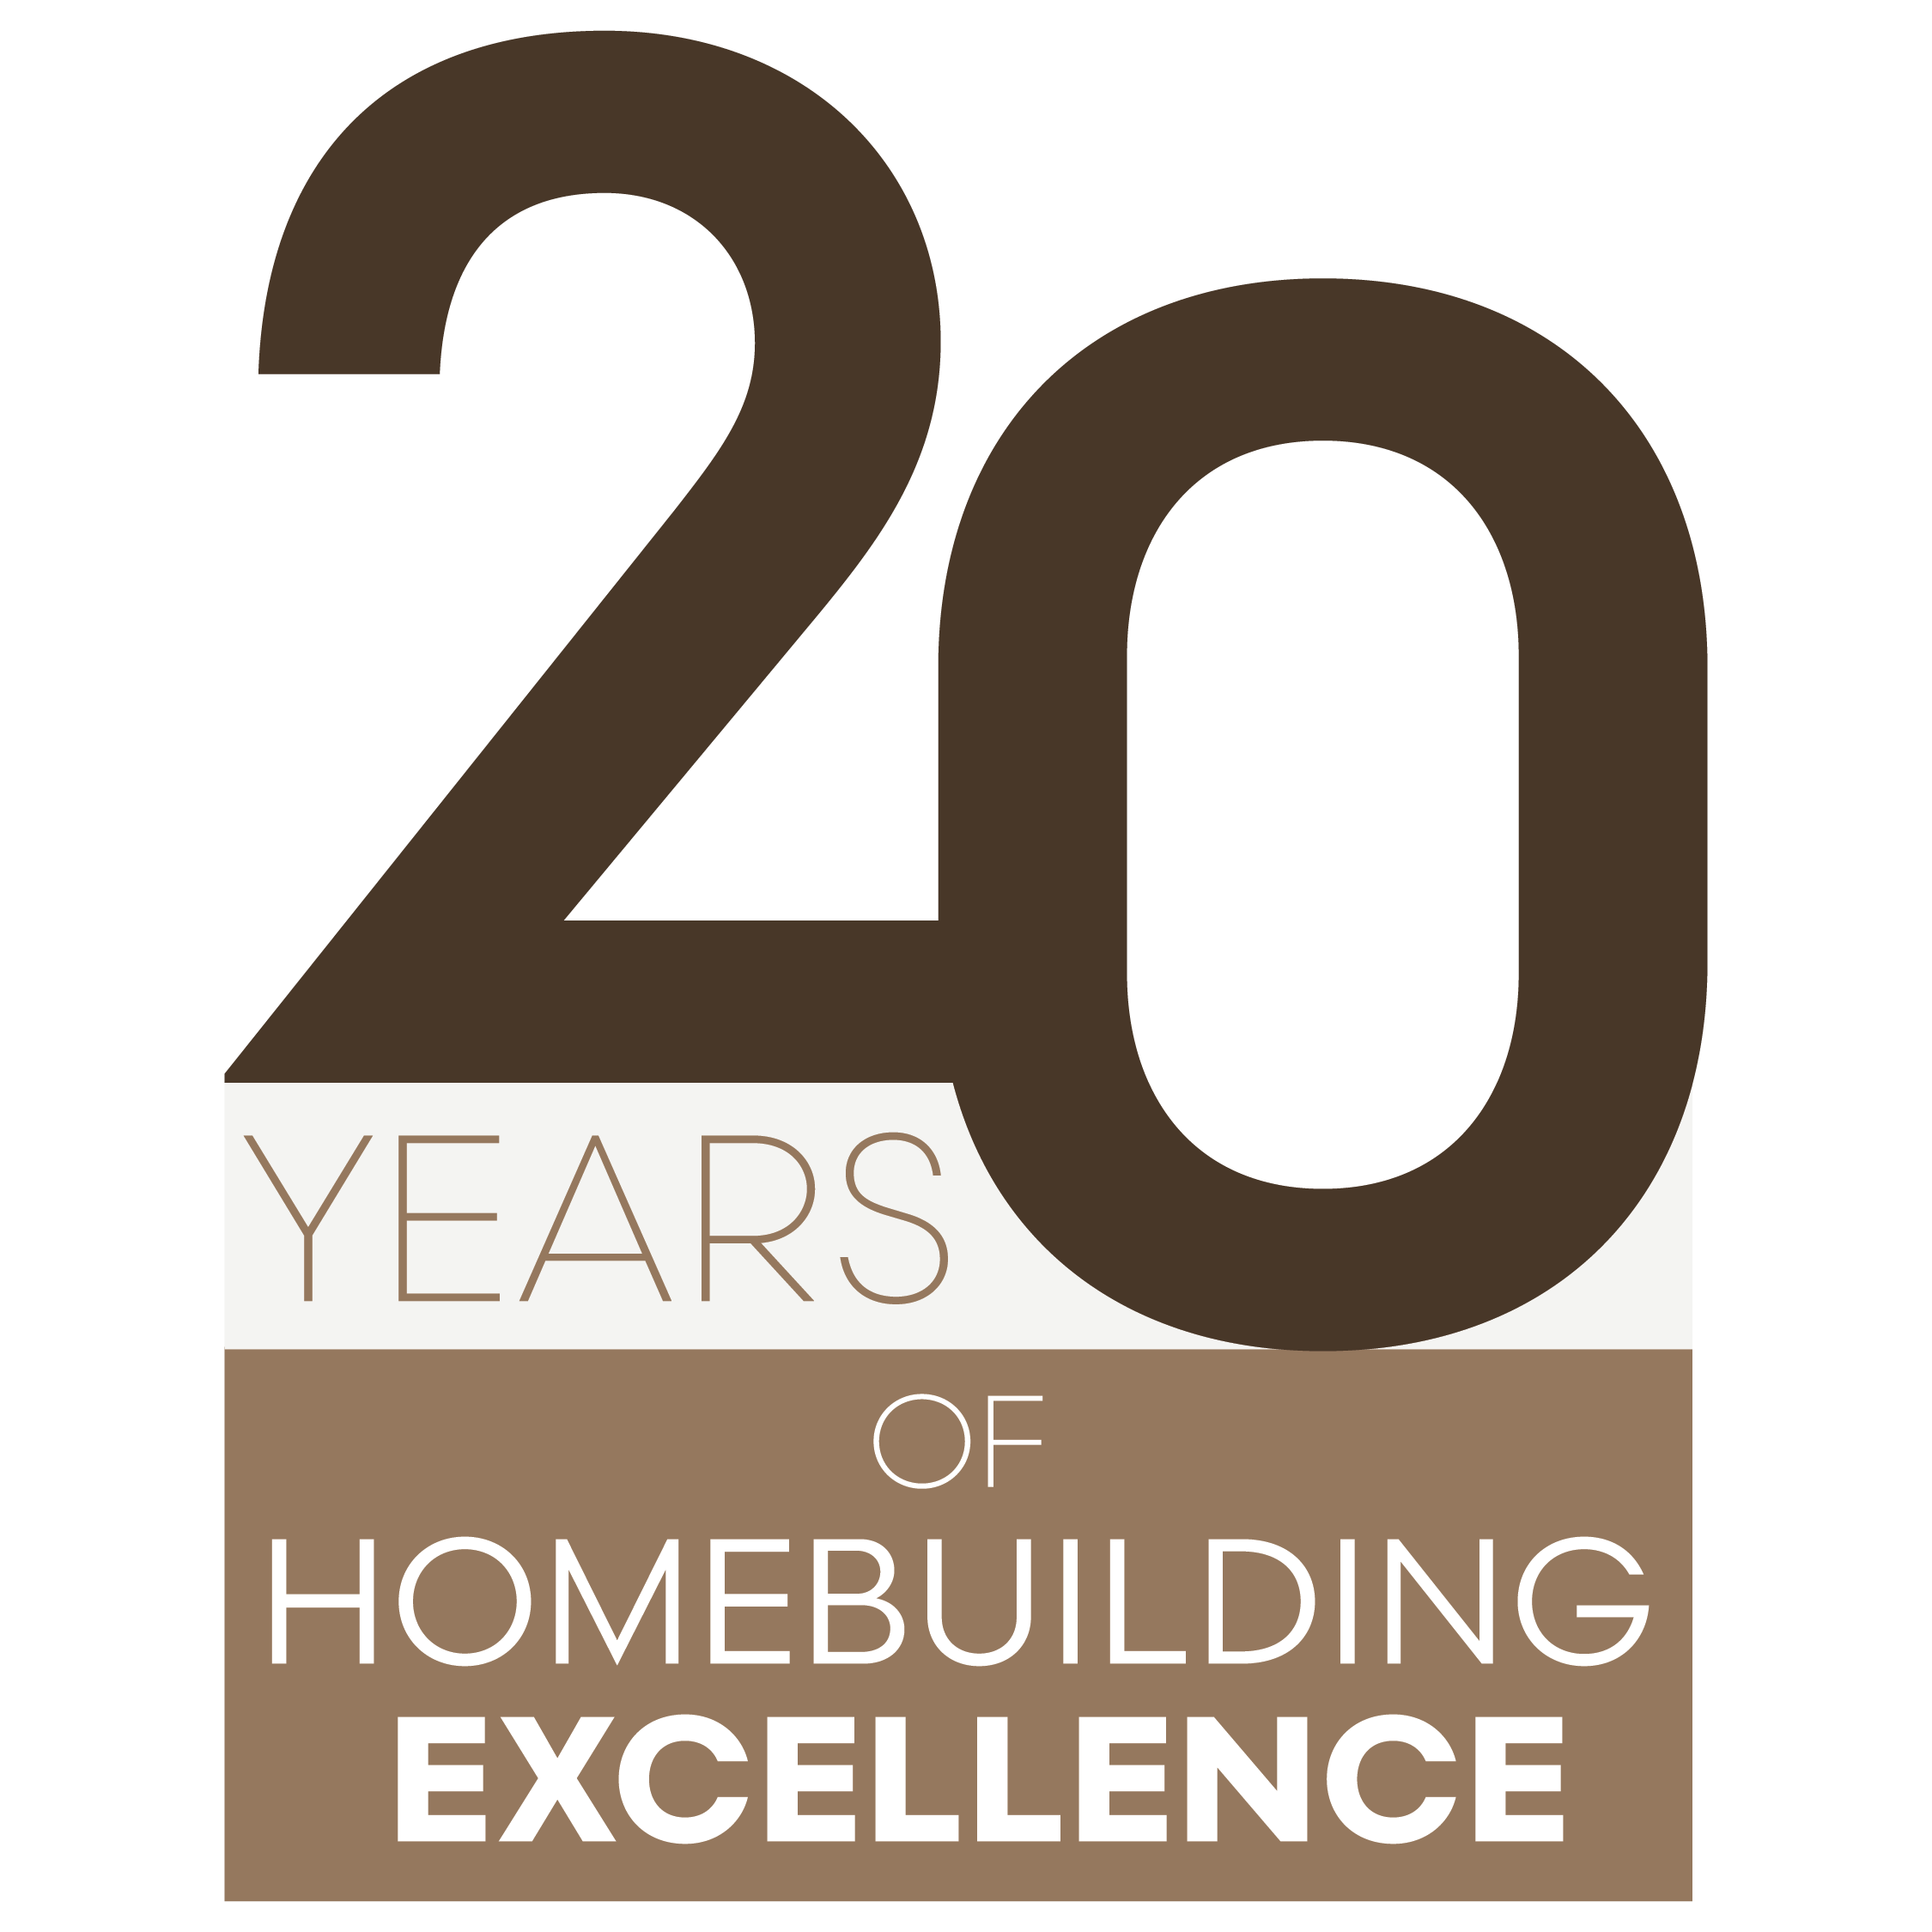 SR Homes Celebrates 20 Years of Homebuilding Excellence | Metro Atlanta Homebuilder